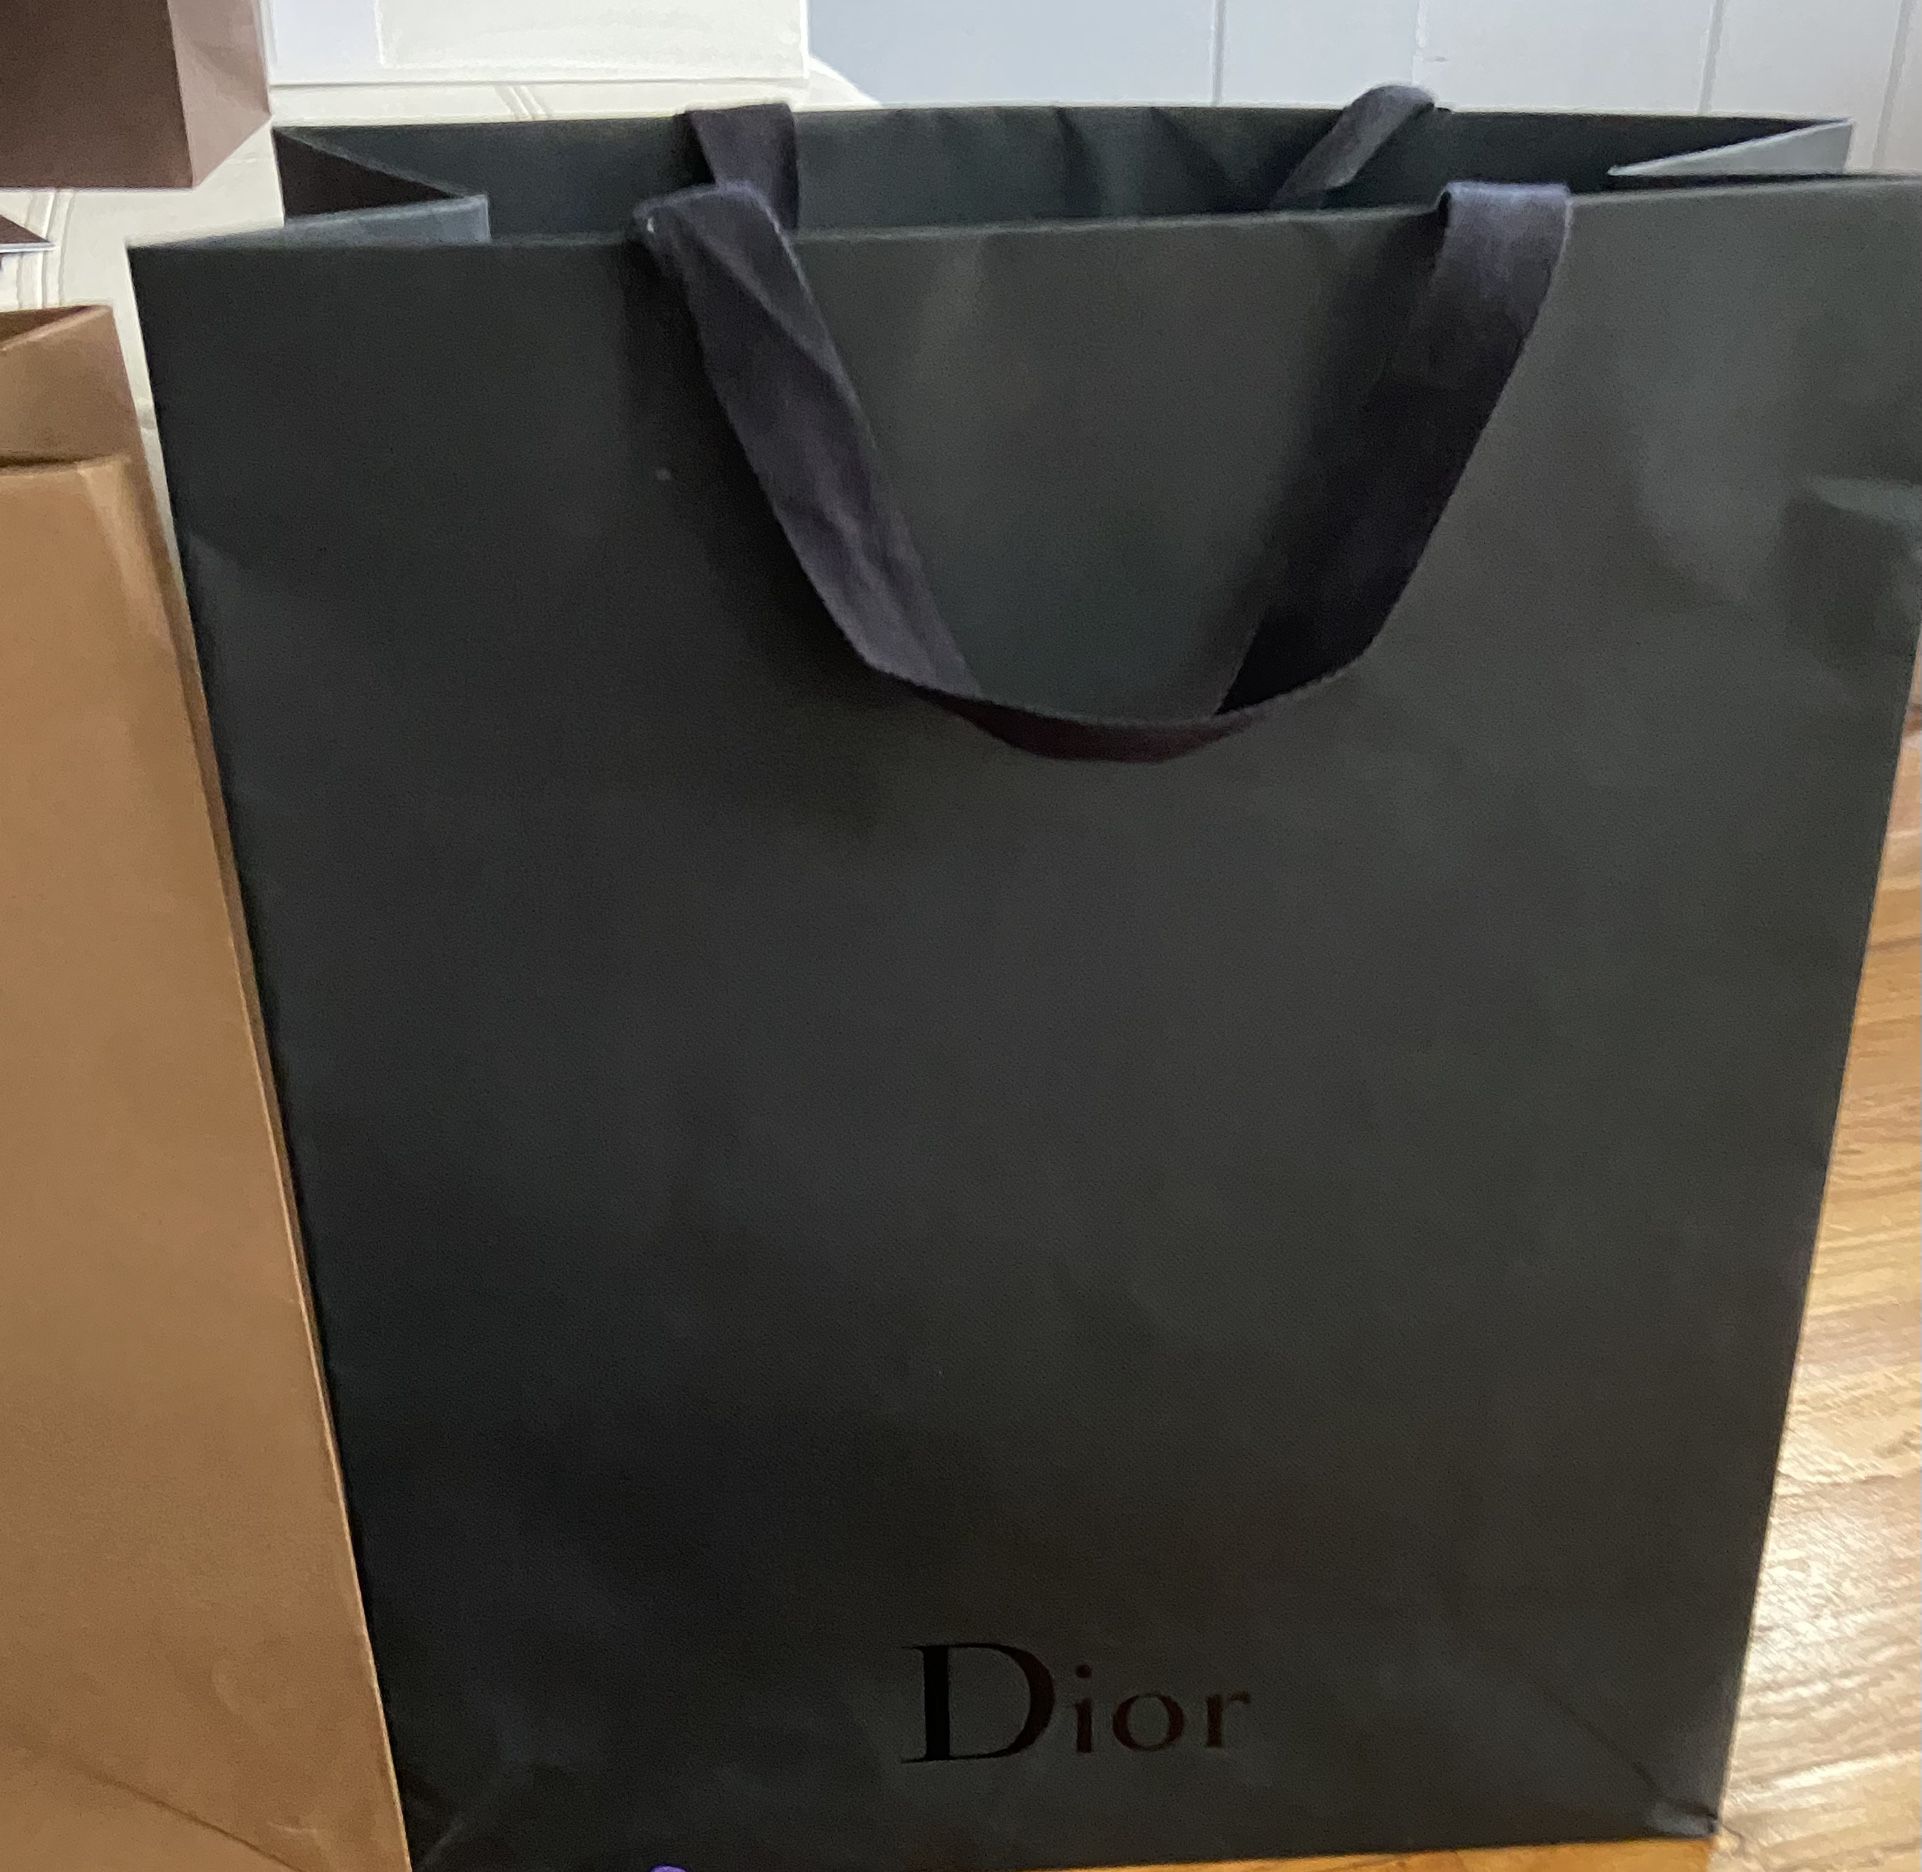 Luxury Brand Shopping Gift Paper Bag Set Hermes Louis Vuitton